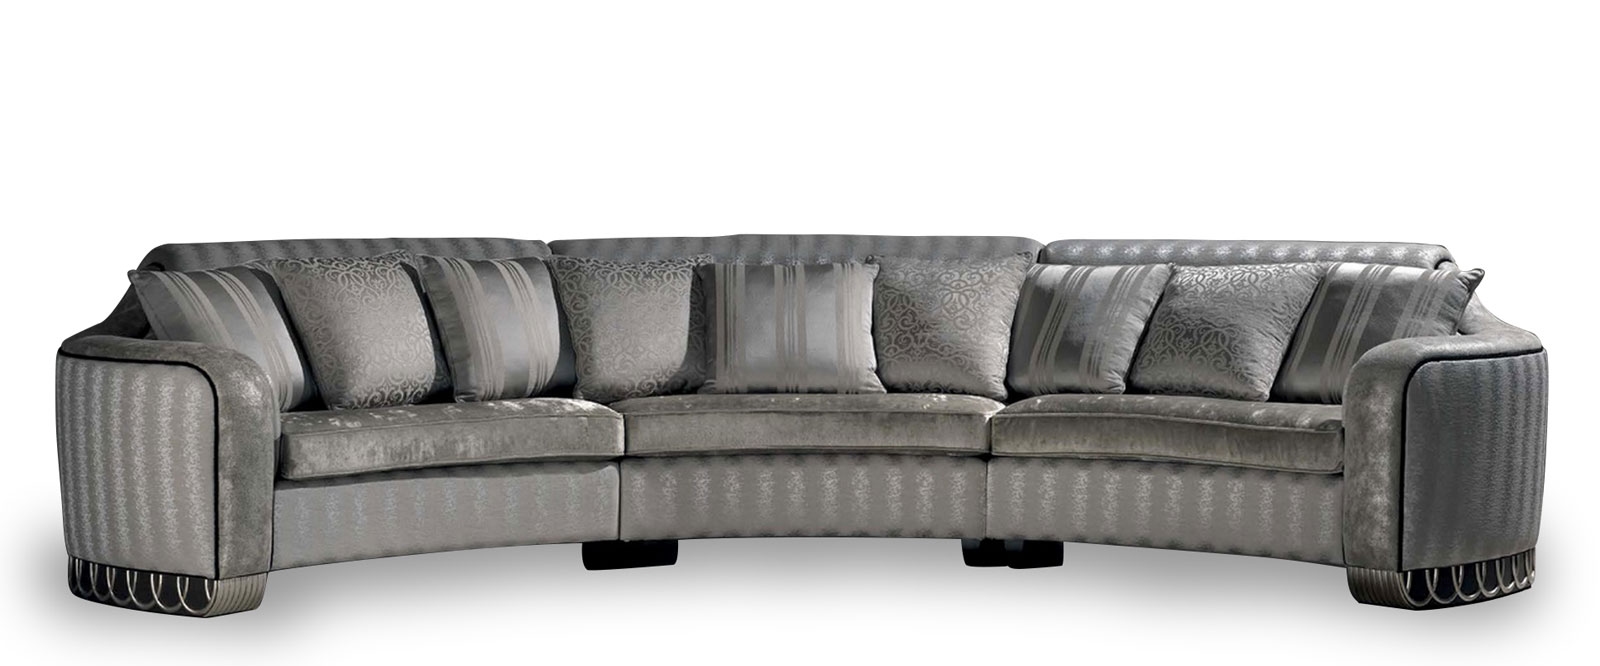 Half-moon baroque sofa 